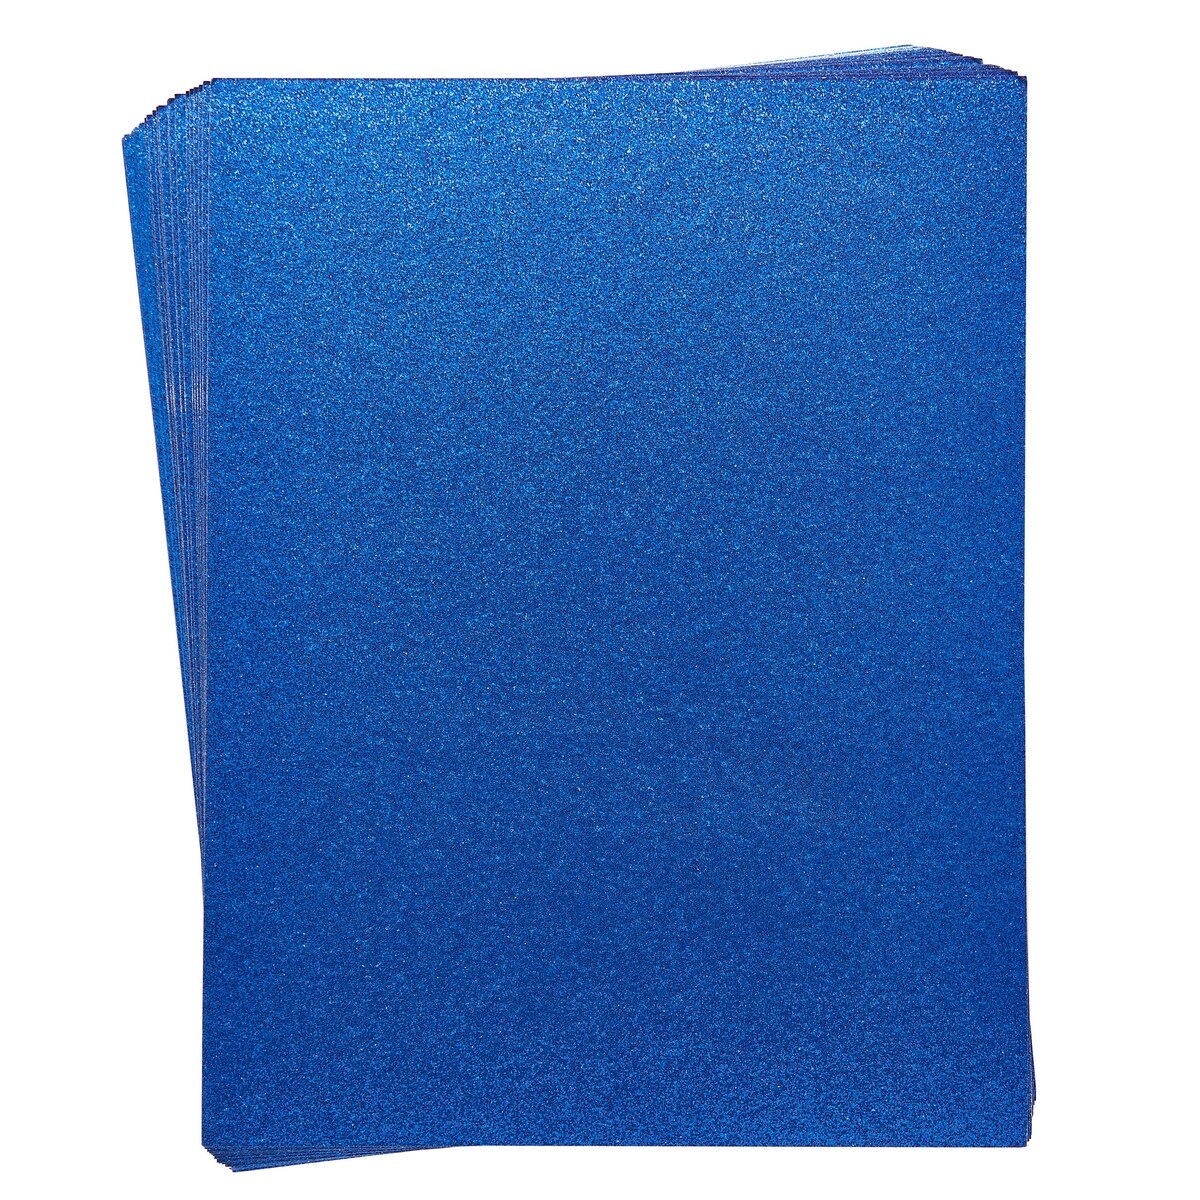 Glitter Cardstock Royal Blue 12 x 12 81# Cover Sheets Bulk Pack of 15